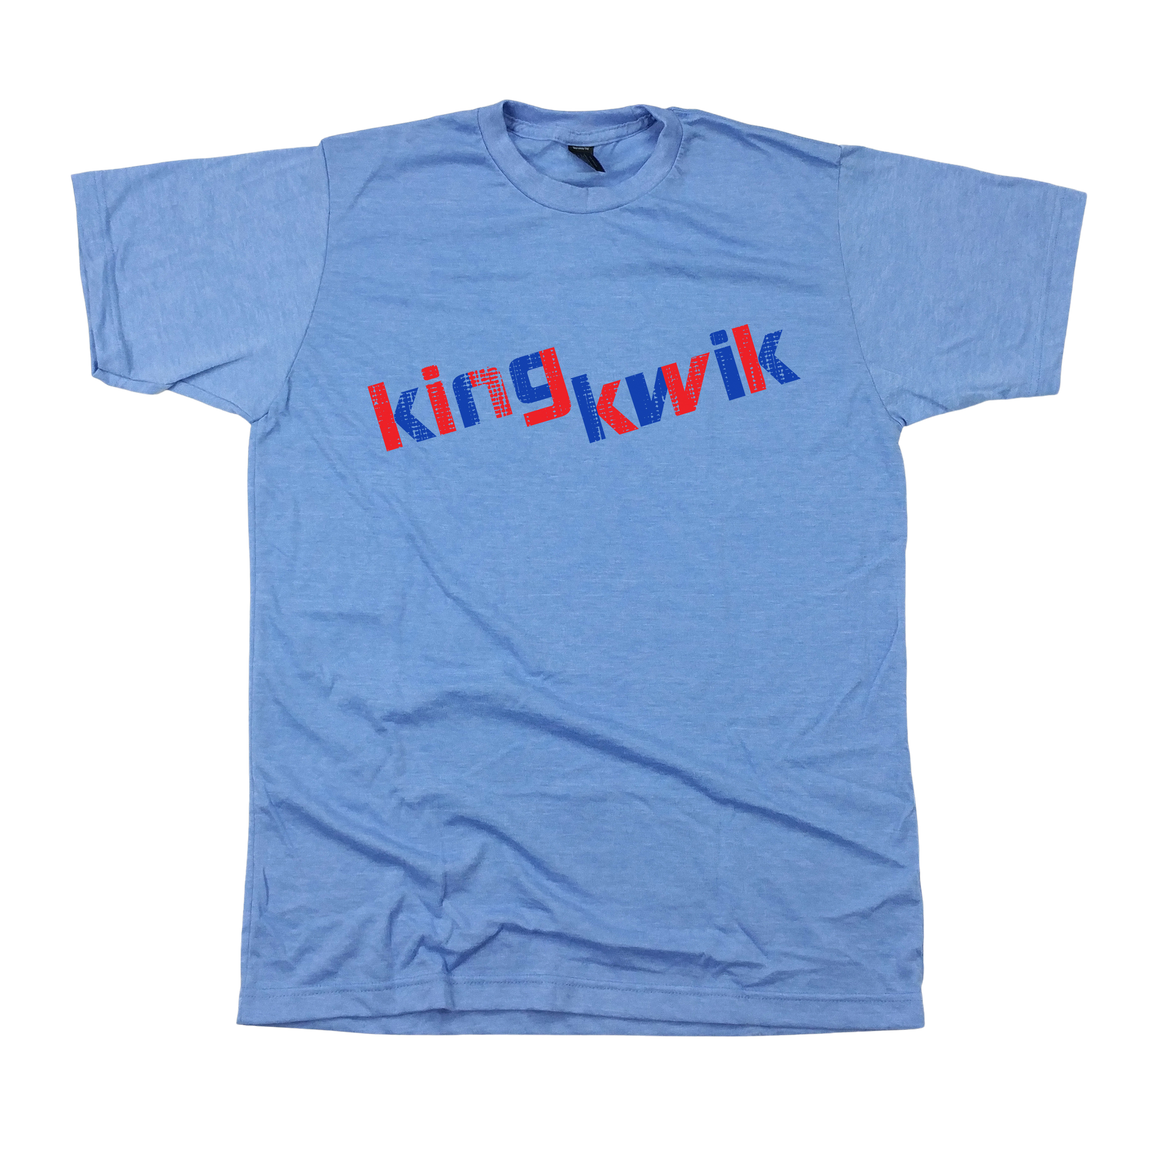 King Kwik - Unisex T-Shirt Blue Cincy Shirts